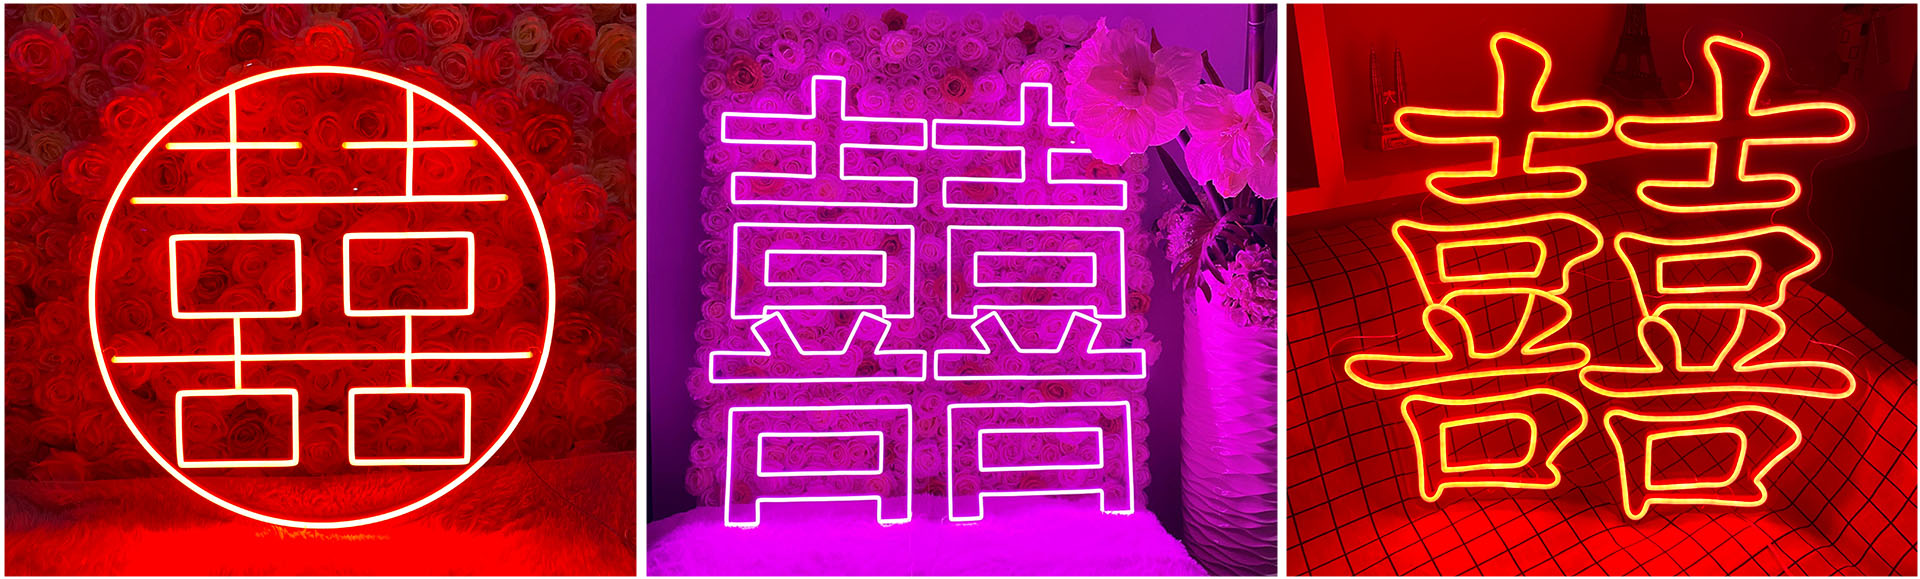 chinese wedding decor 双囍 Neon light sign